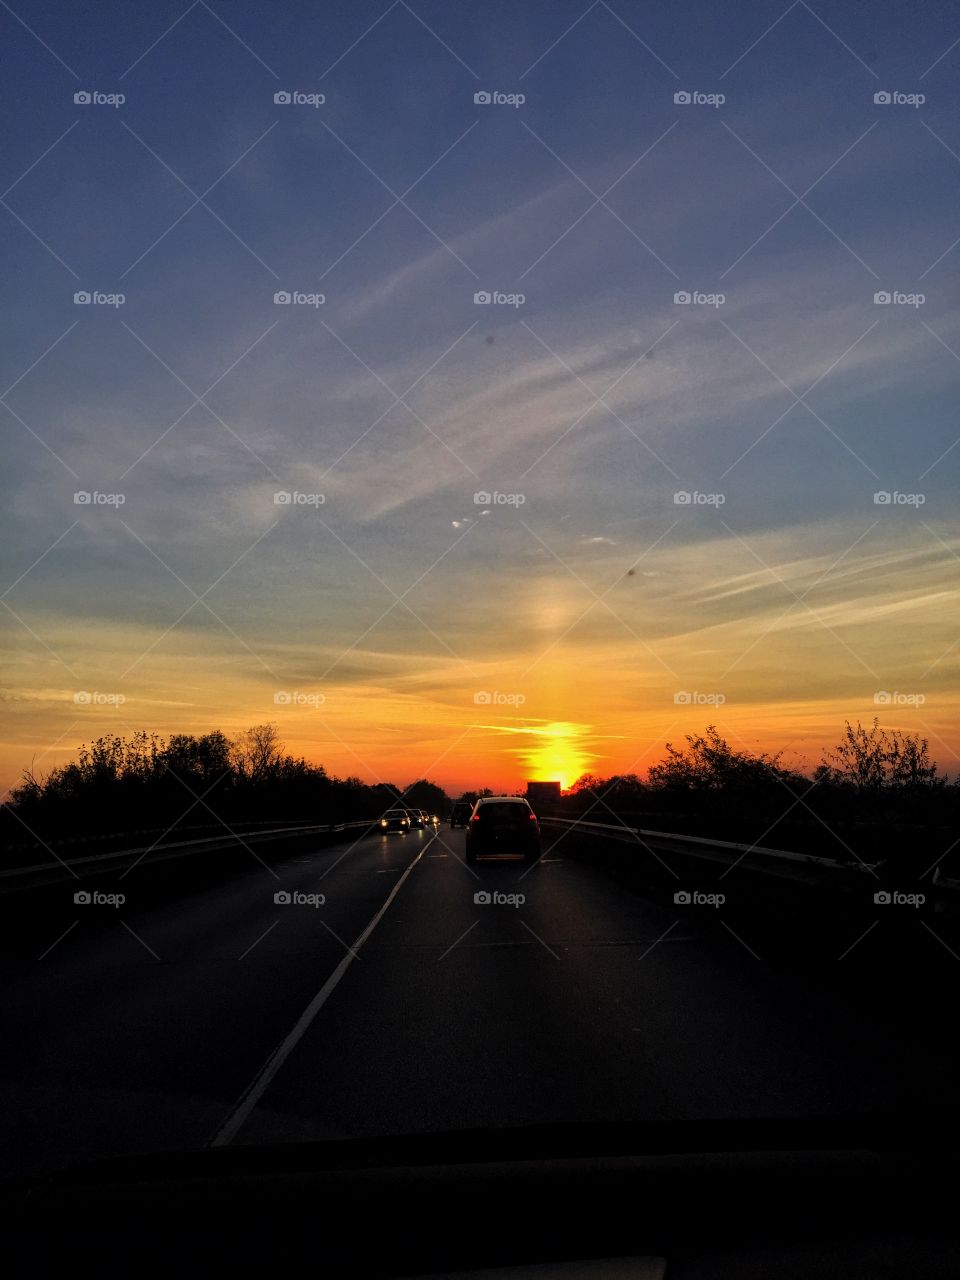 Sunrise road 